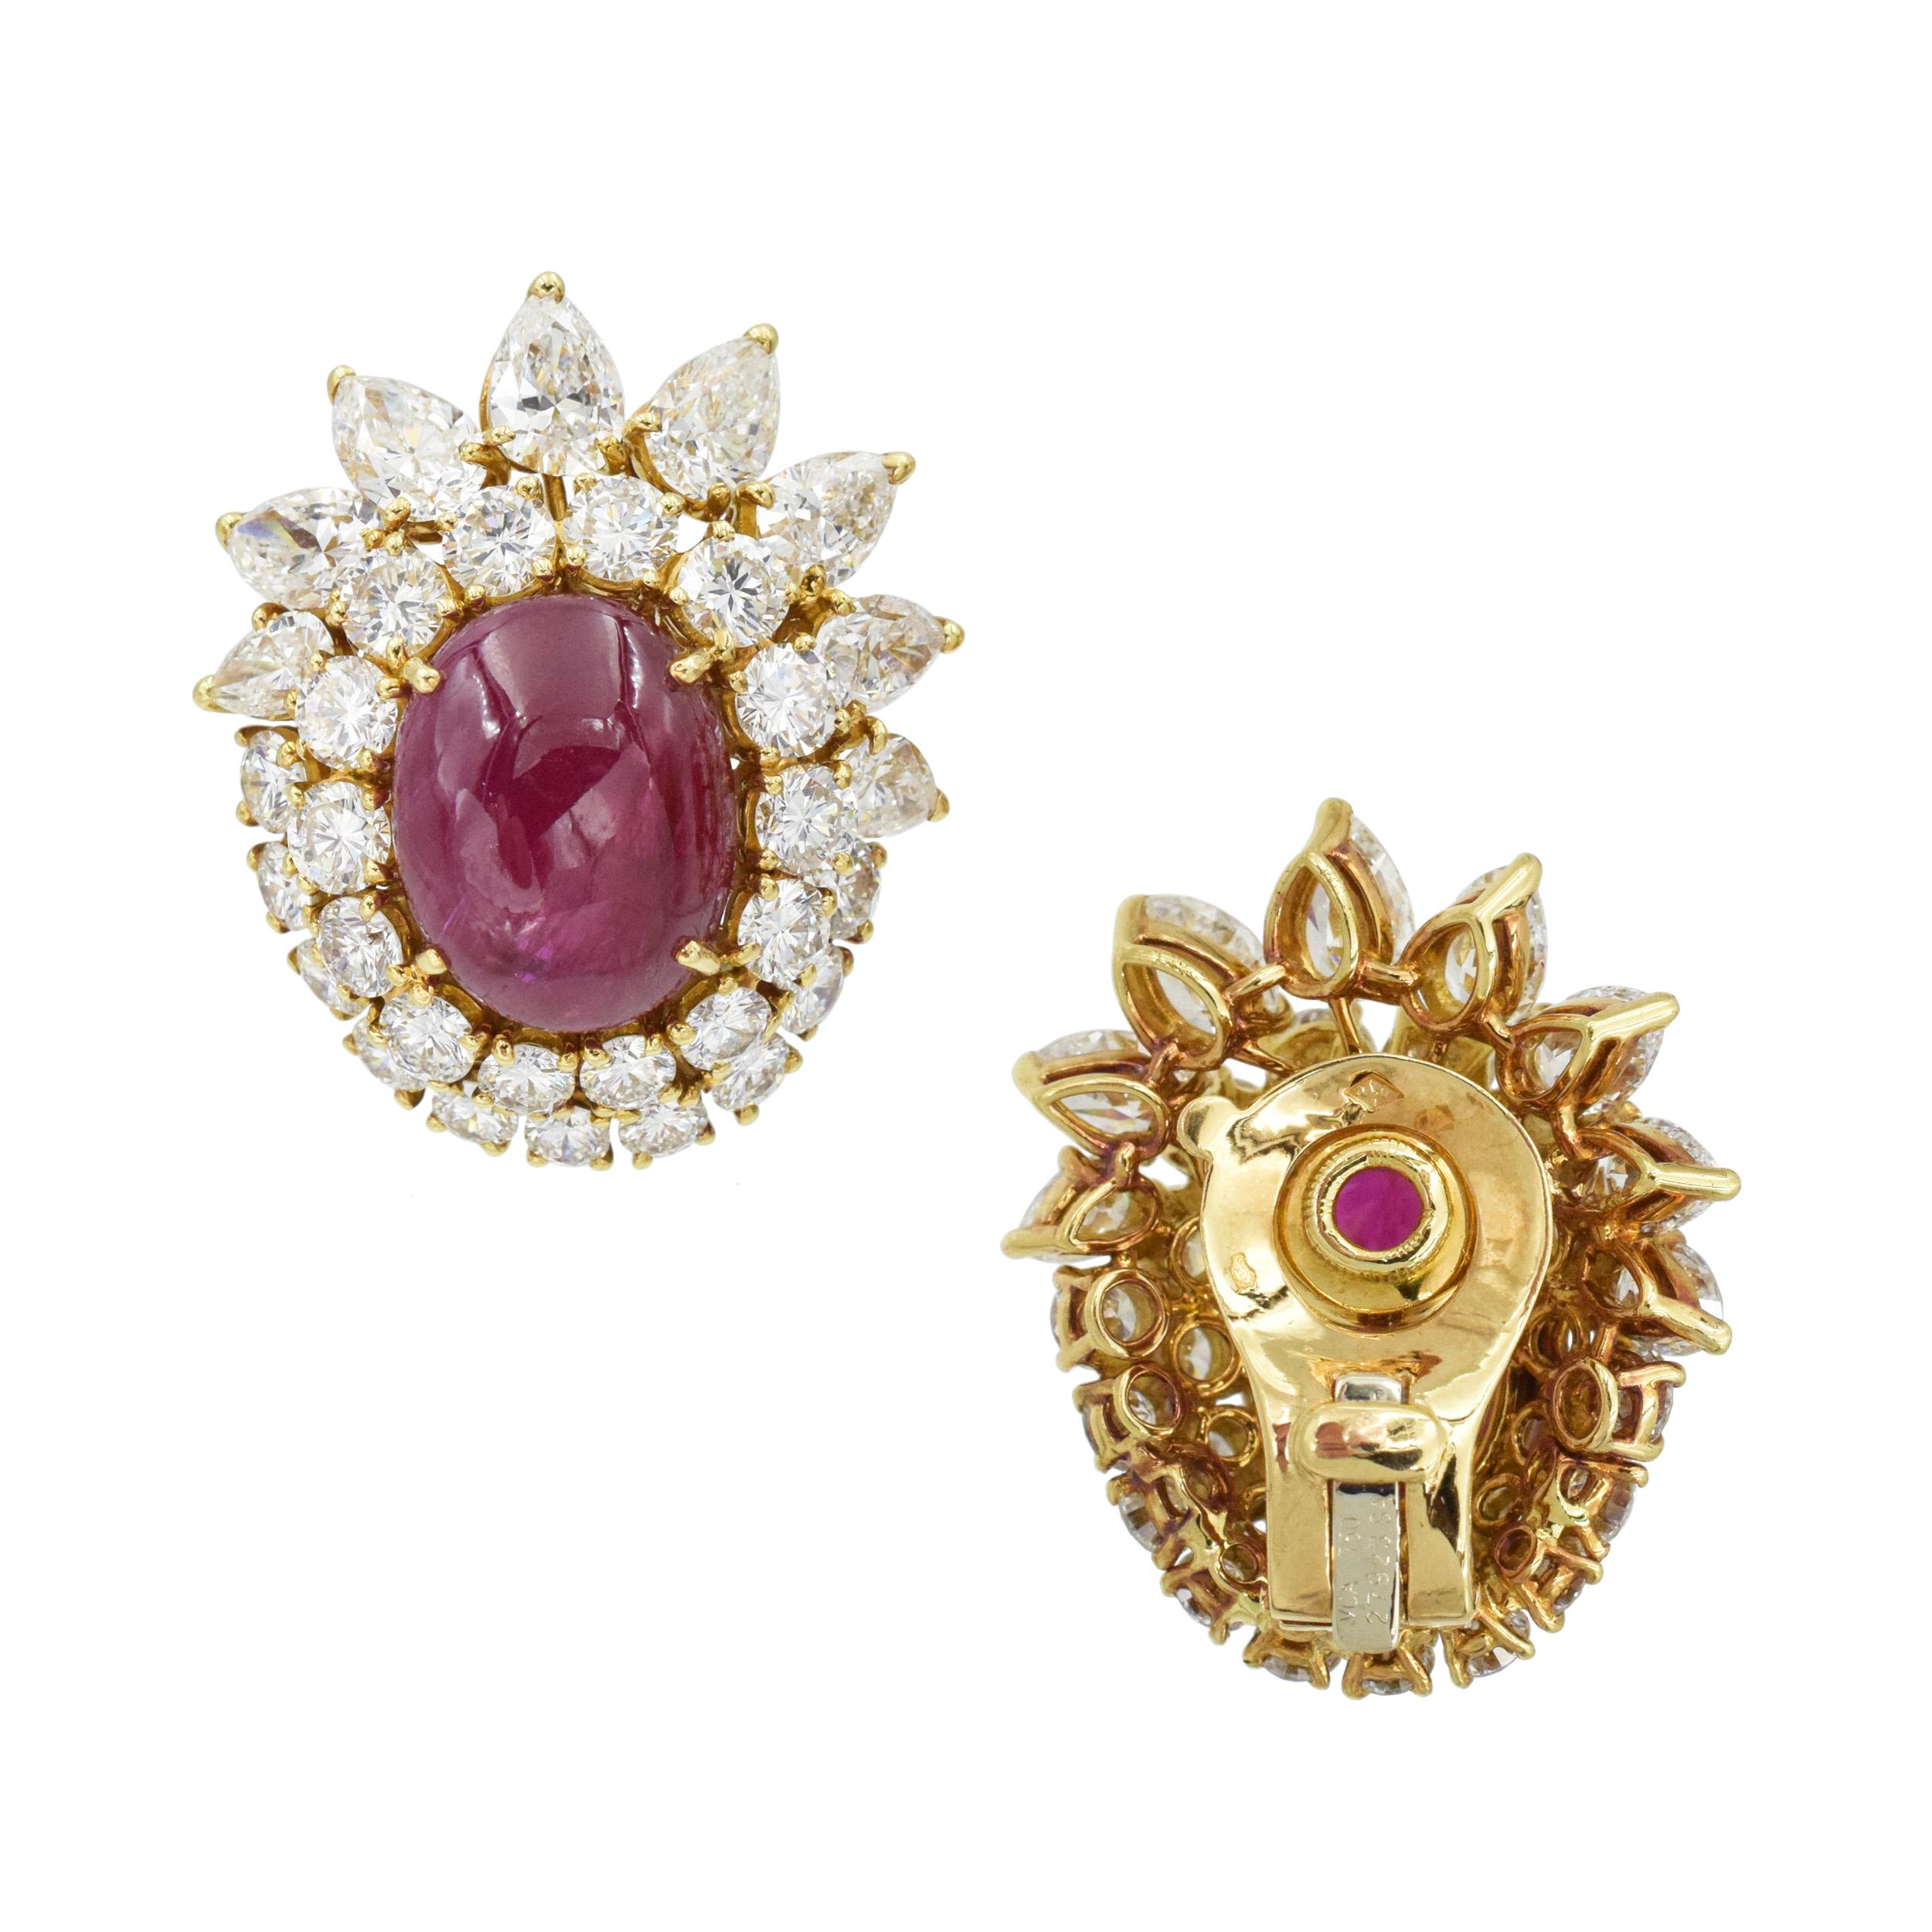 Women's Van Cleef & Arpels Ruby and Diamond Earrings and Ring